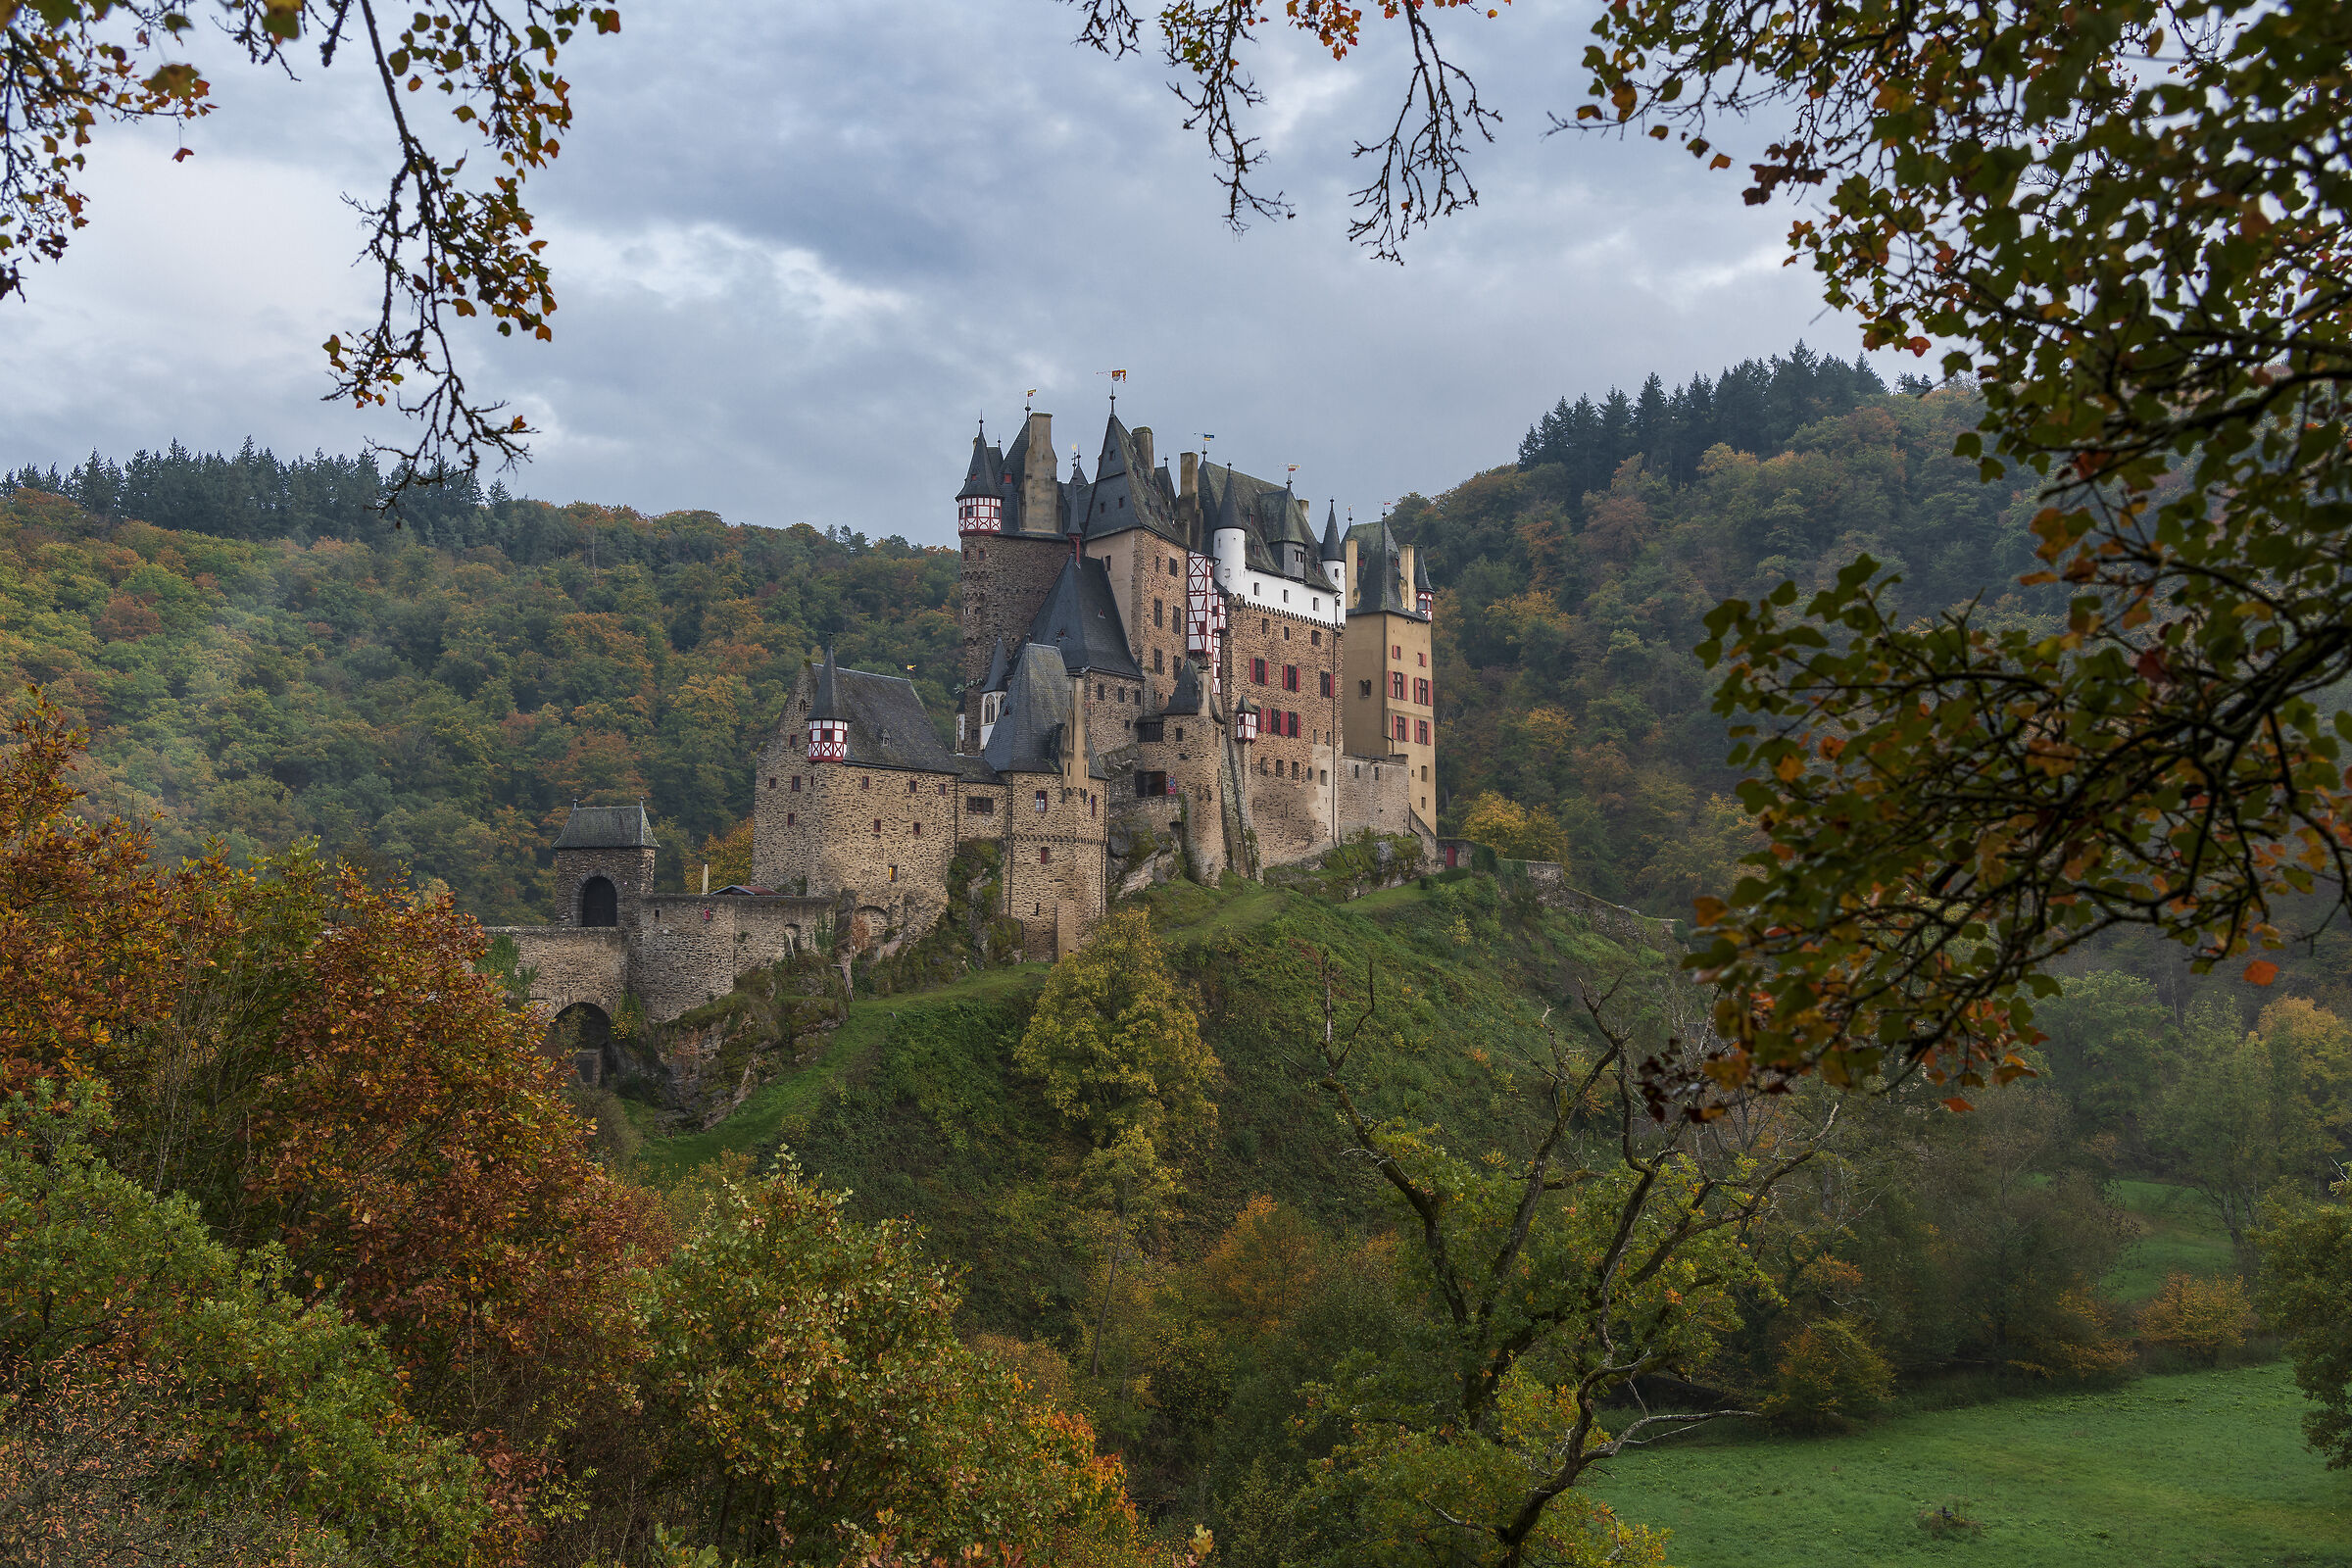 October foliage in Burg Eltz...